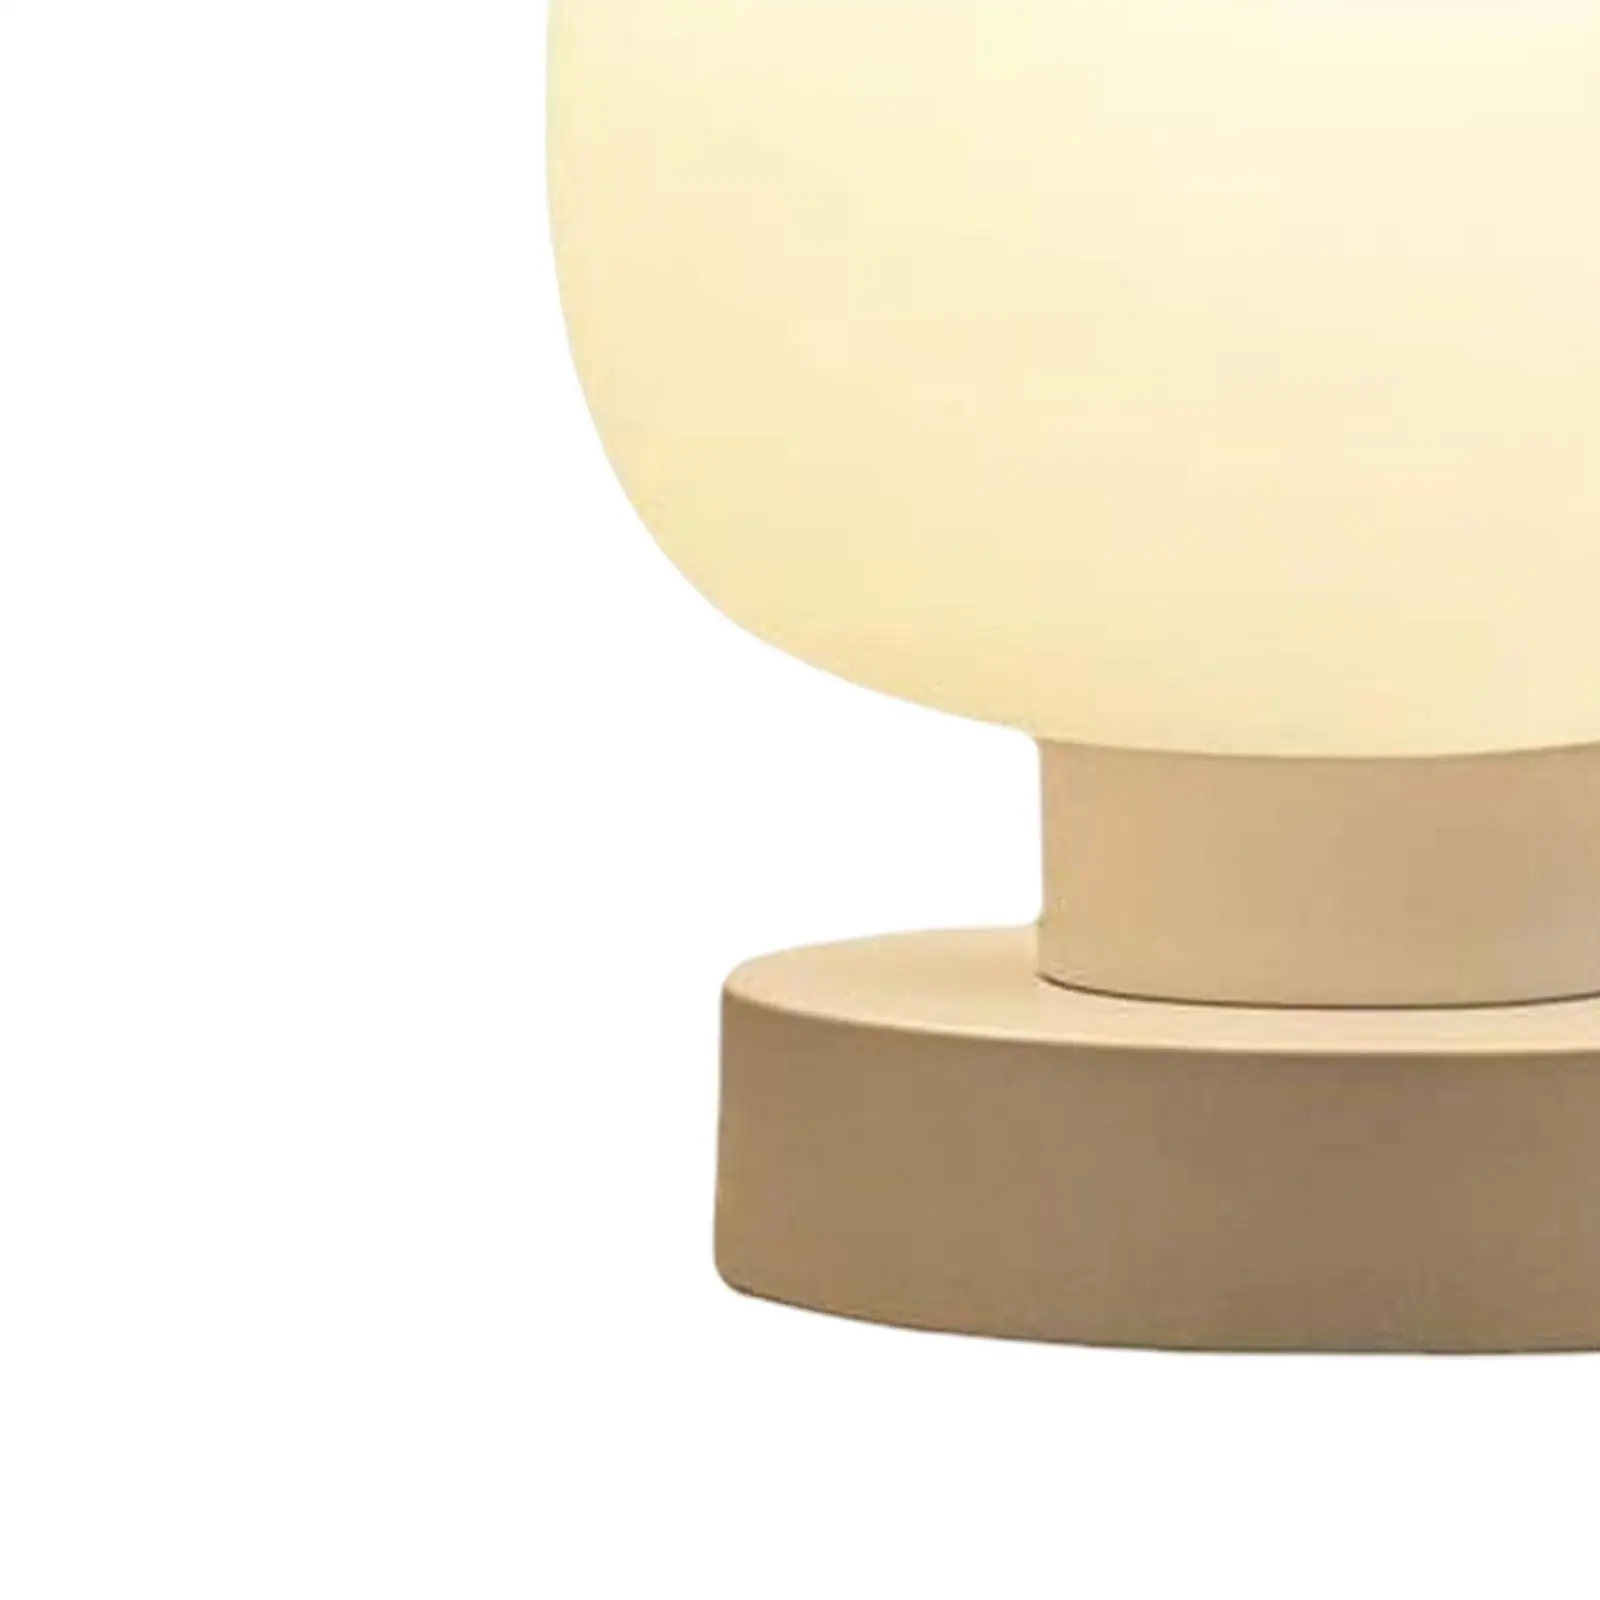 Bedside Lamp LED Bulb Simple Design Night Light Desk Light Touch Bedside Table Lamp for NightStand Children Room Home Ornament